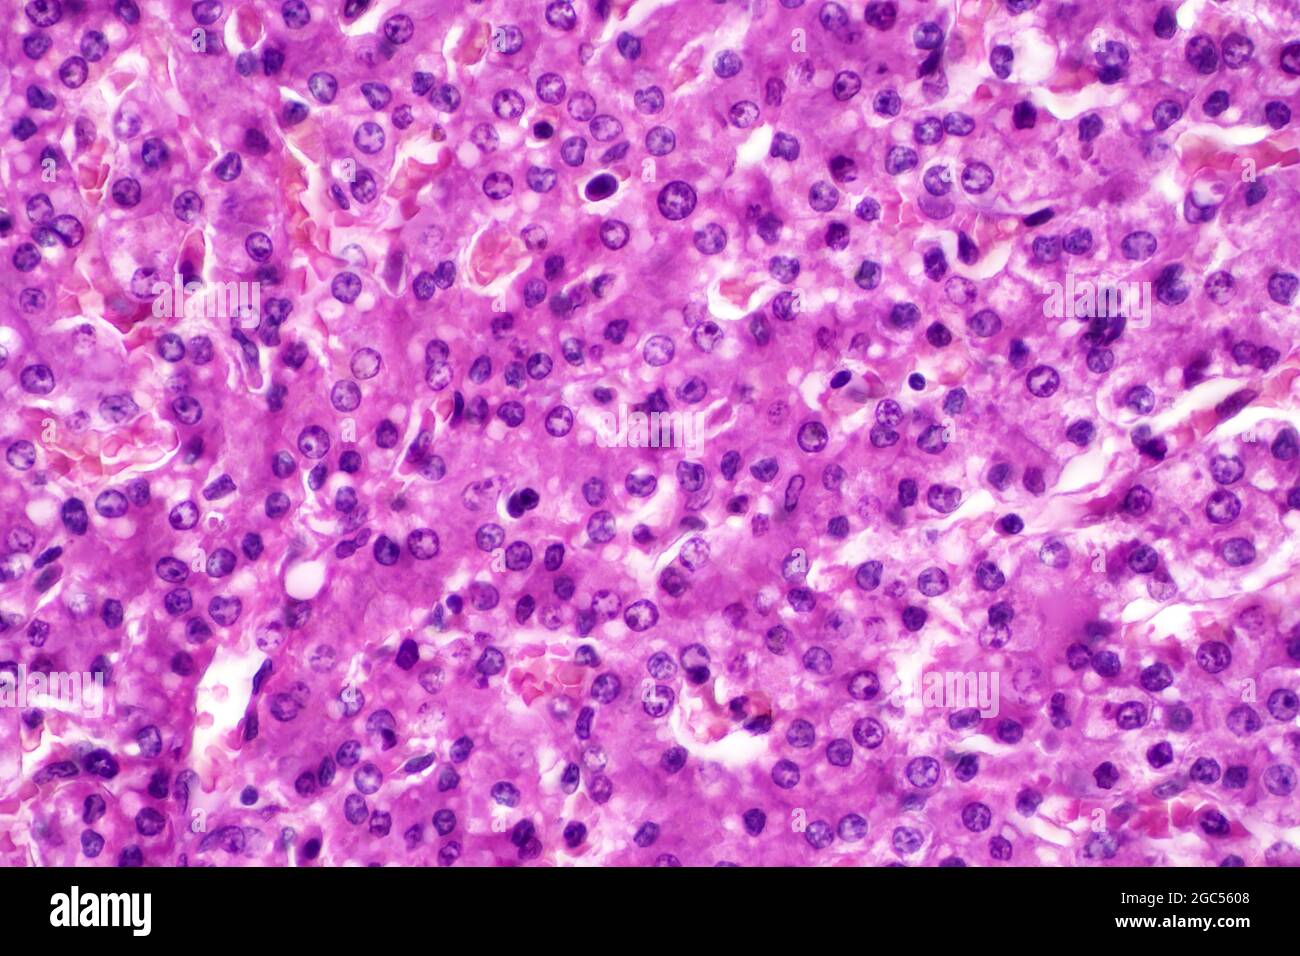 Hepatocyte cells, light micrograph Stock Photo